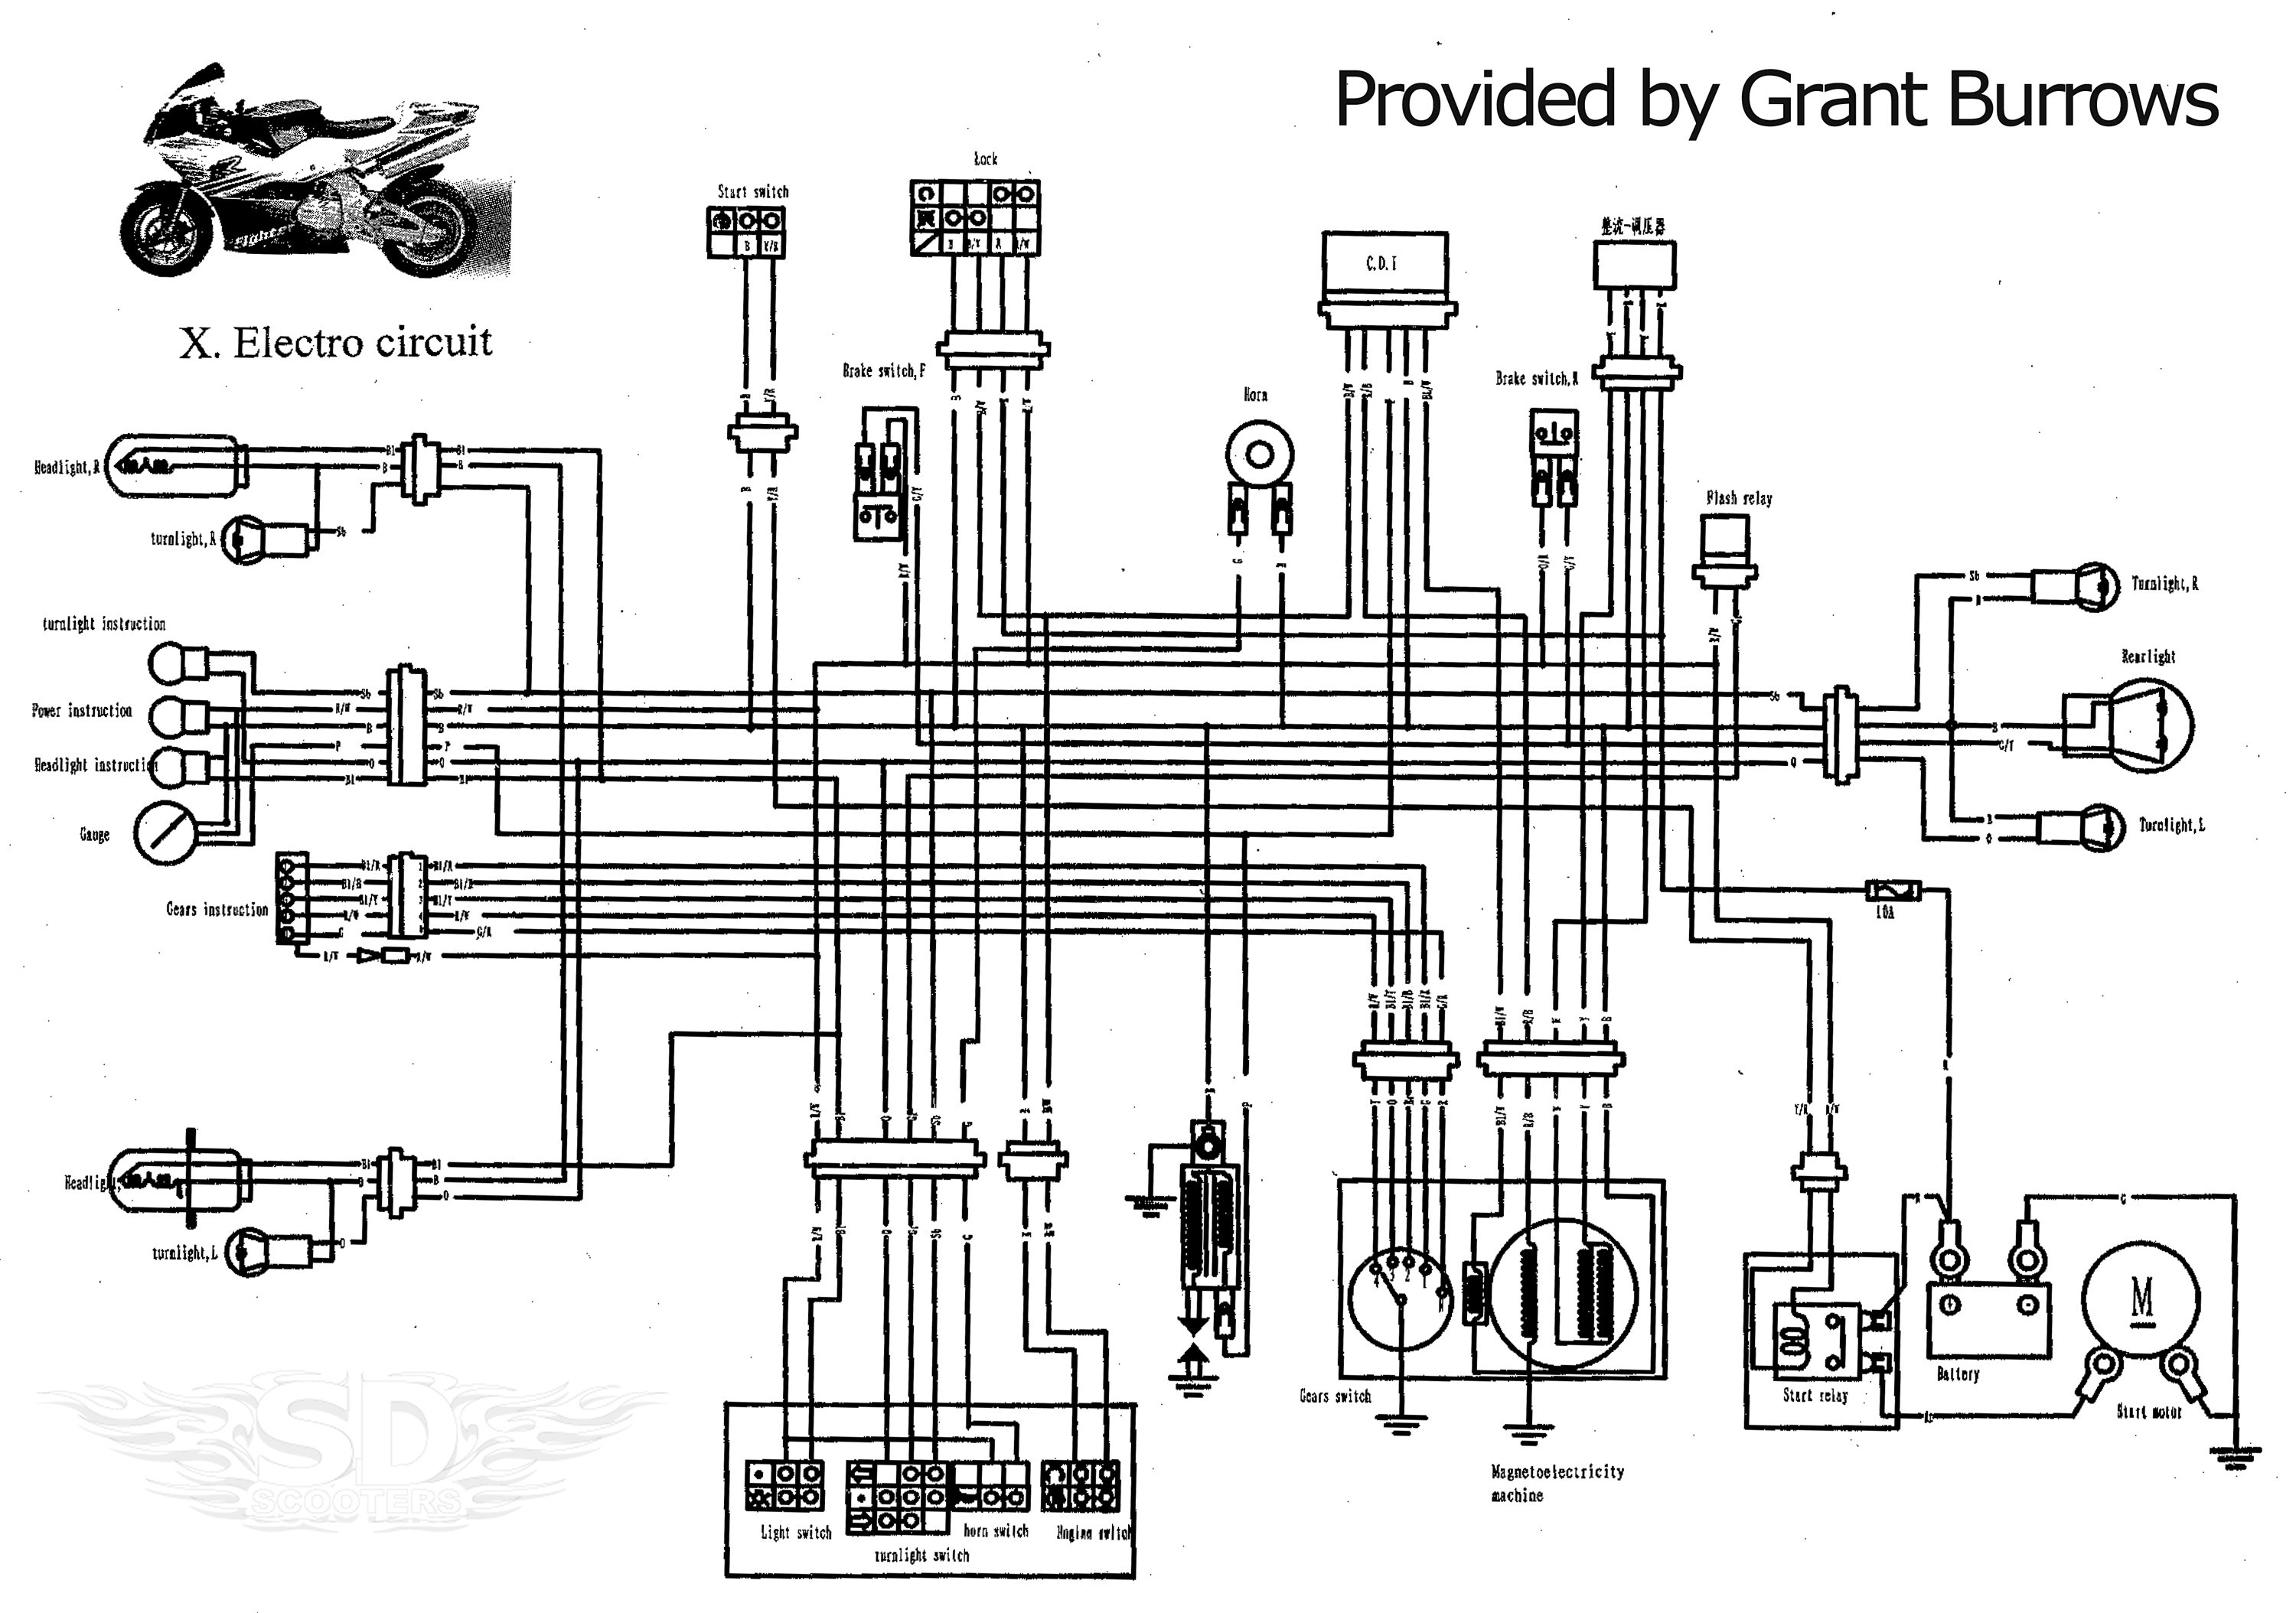 Parts Of A Car Engine Diagram Honda 50cc Moped Engine Diagrams Wiring Diagram Expert Of Parts Of A Car Engine Diagram